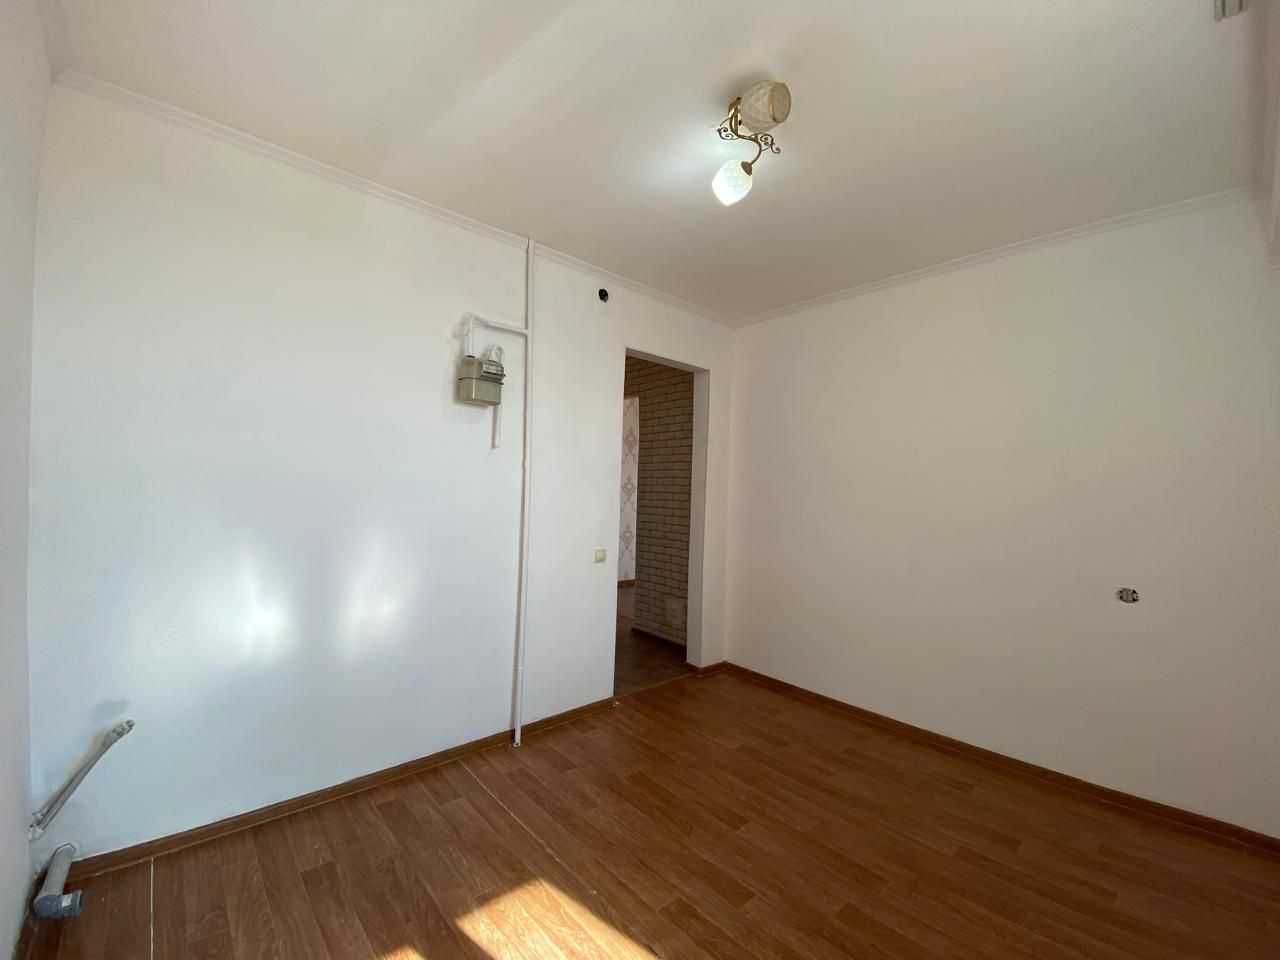 Продам 1 комнатную квартиру в Сарыарке